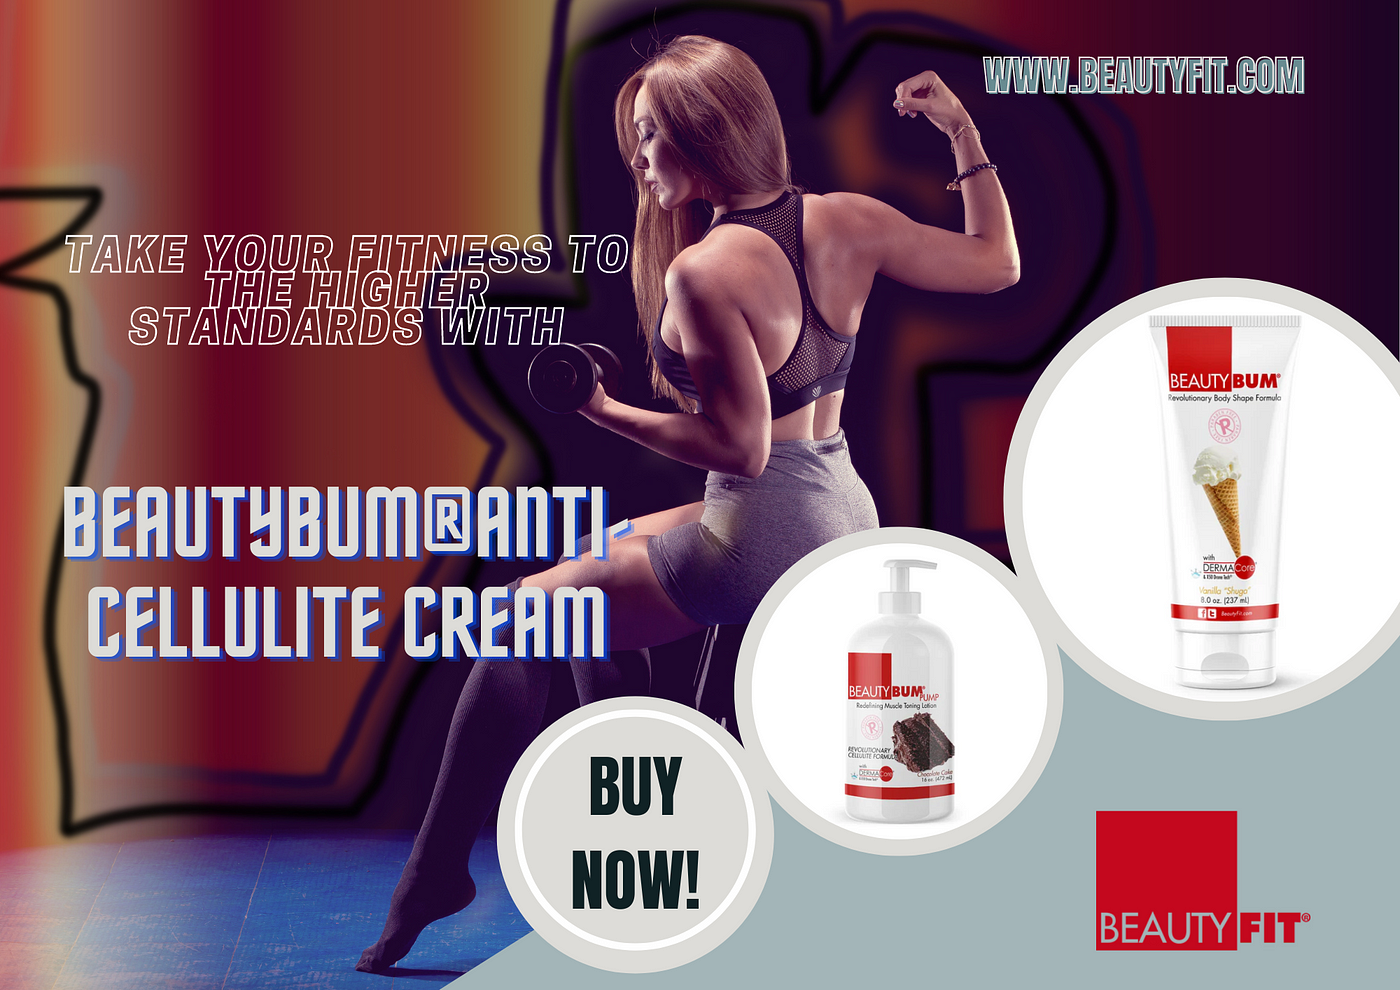 Body Fit Anti Cellulite Cream